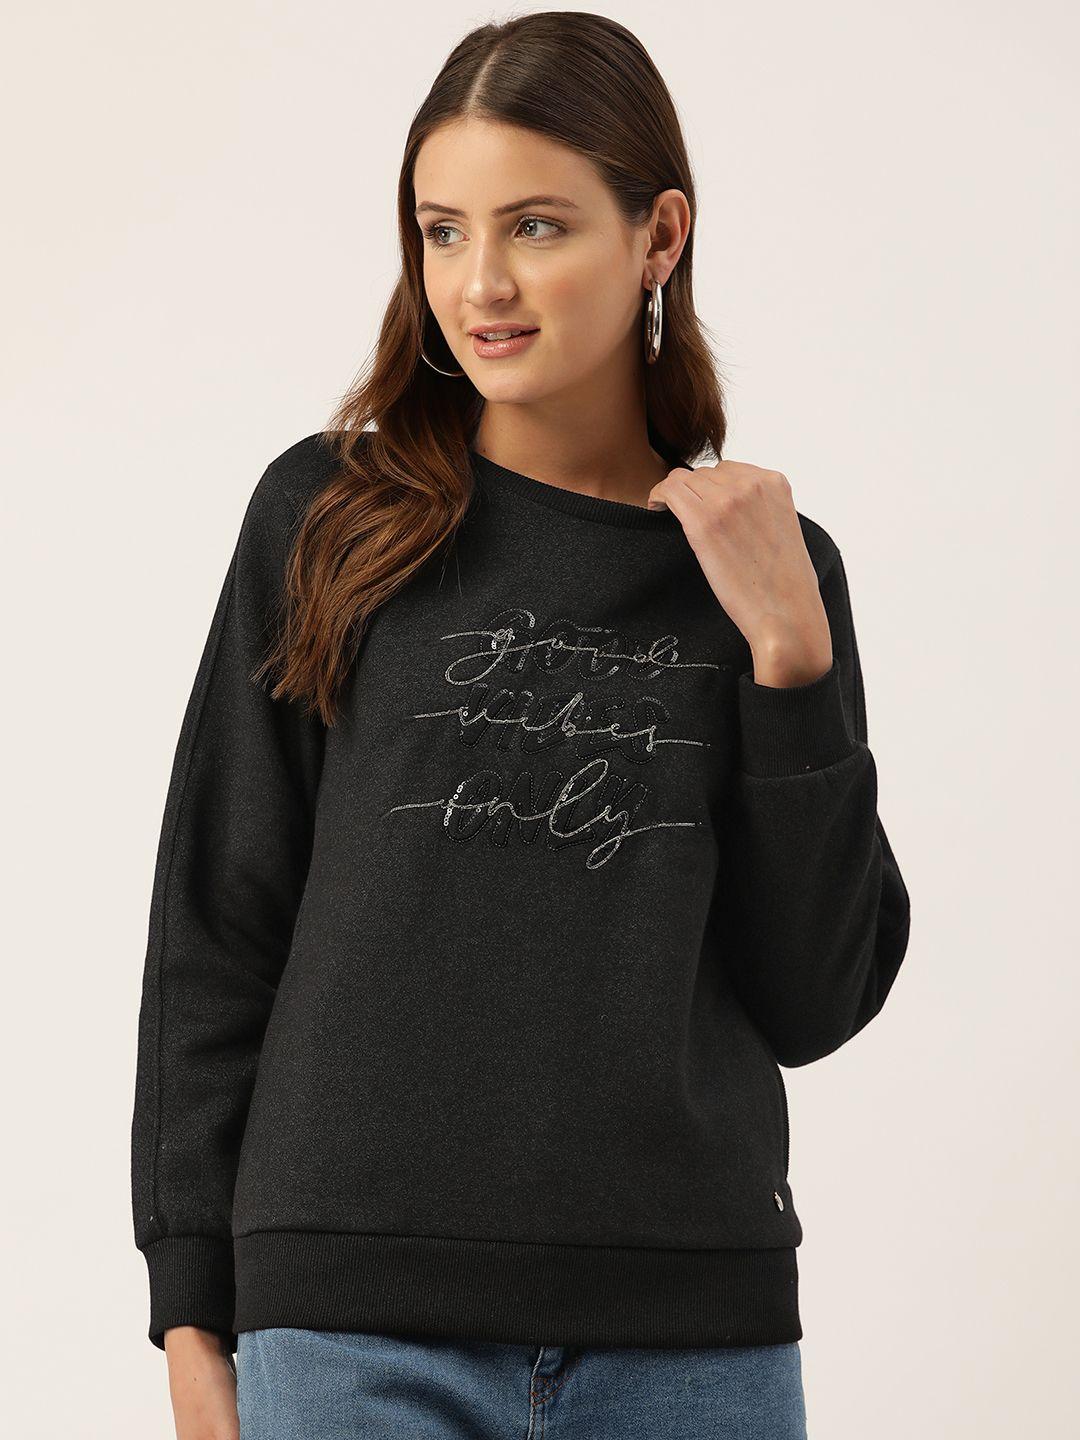 monte carlo women embroidered sweatshirt